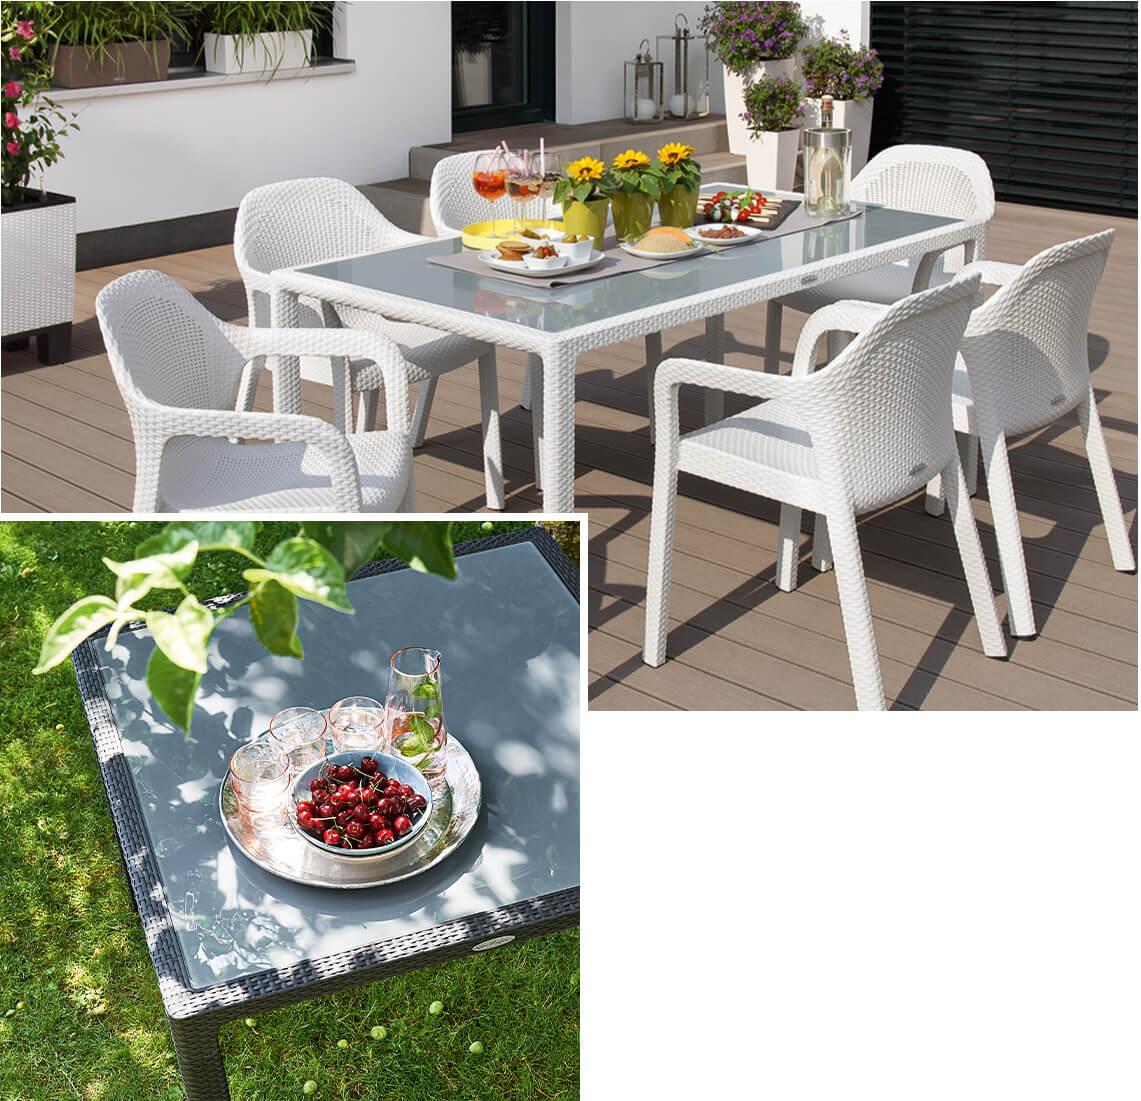 Tables de jardin LECHUZA disponibles en blanc et granit